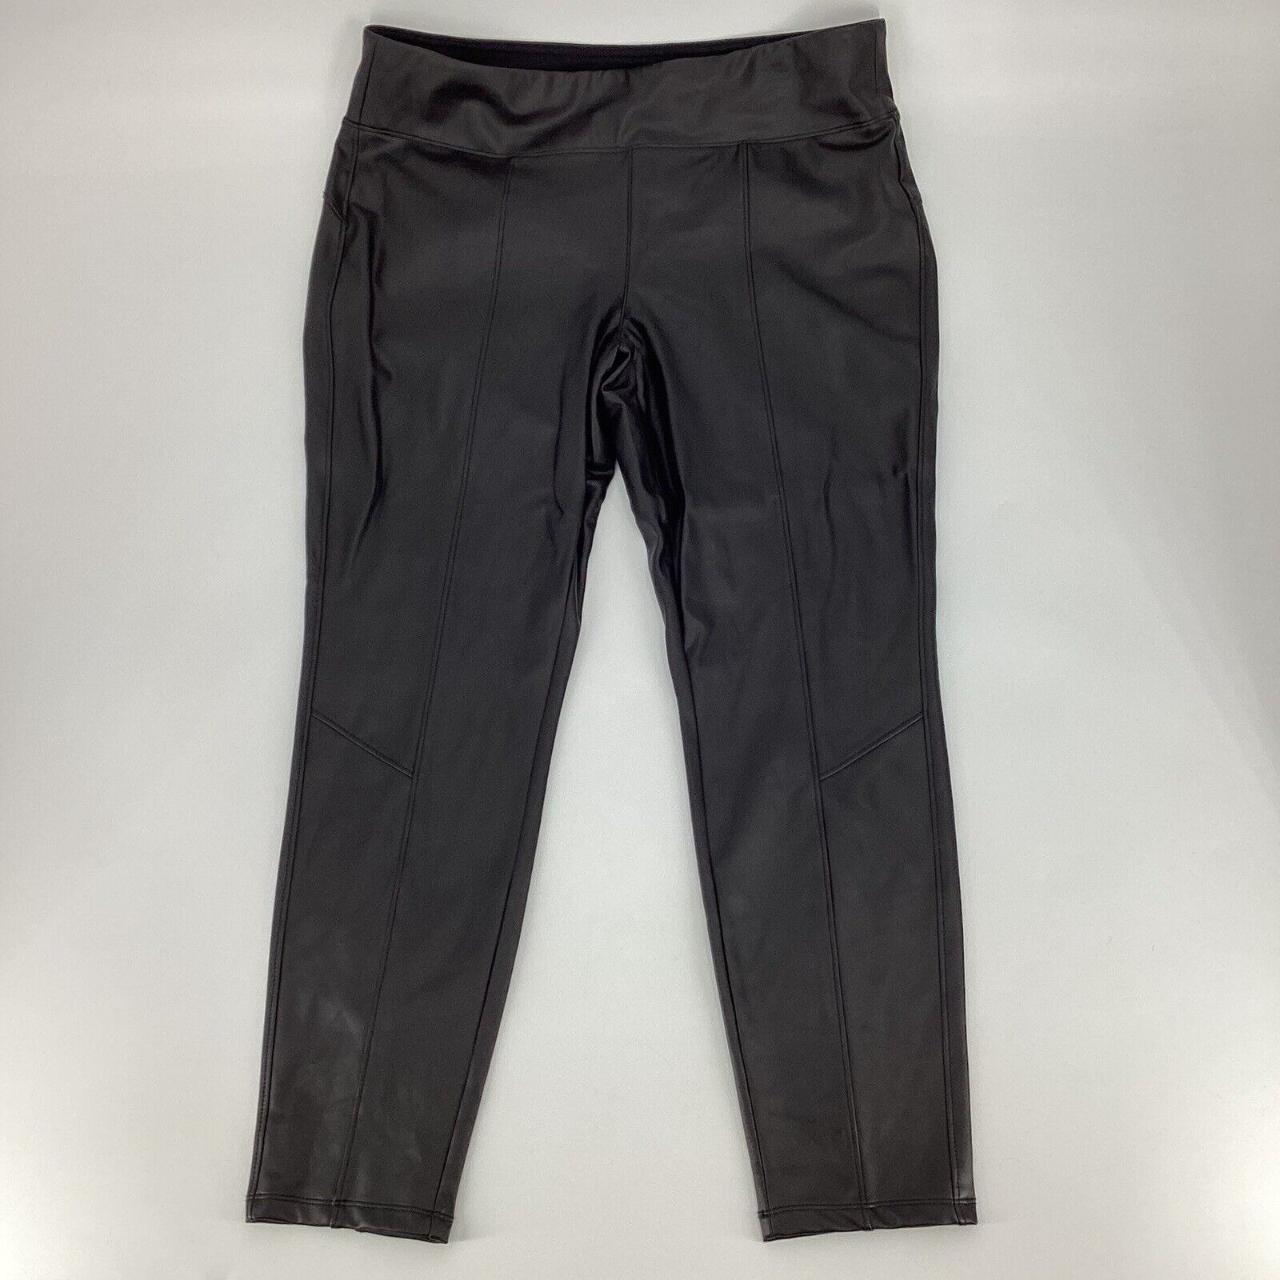 Buy GRECIILOOKS Women's Regular Fit Casual Pants (GL-TR772_Black at  Amazon.in